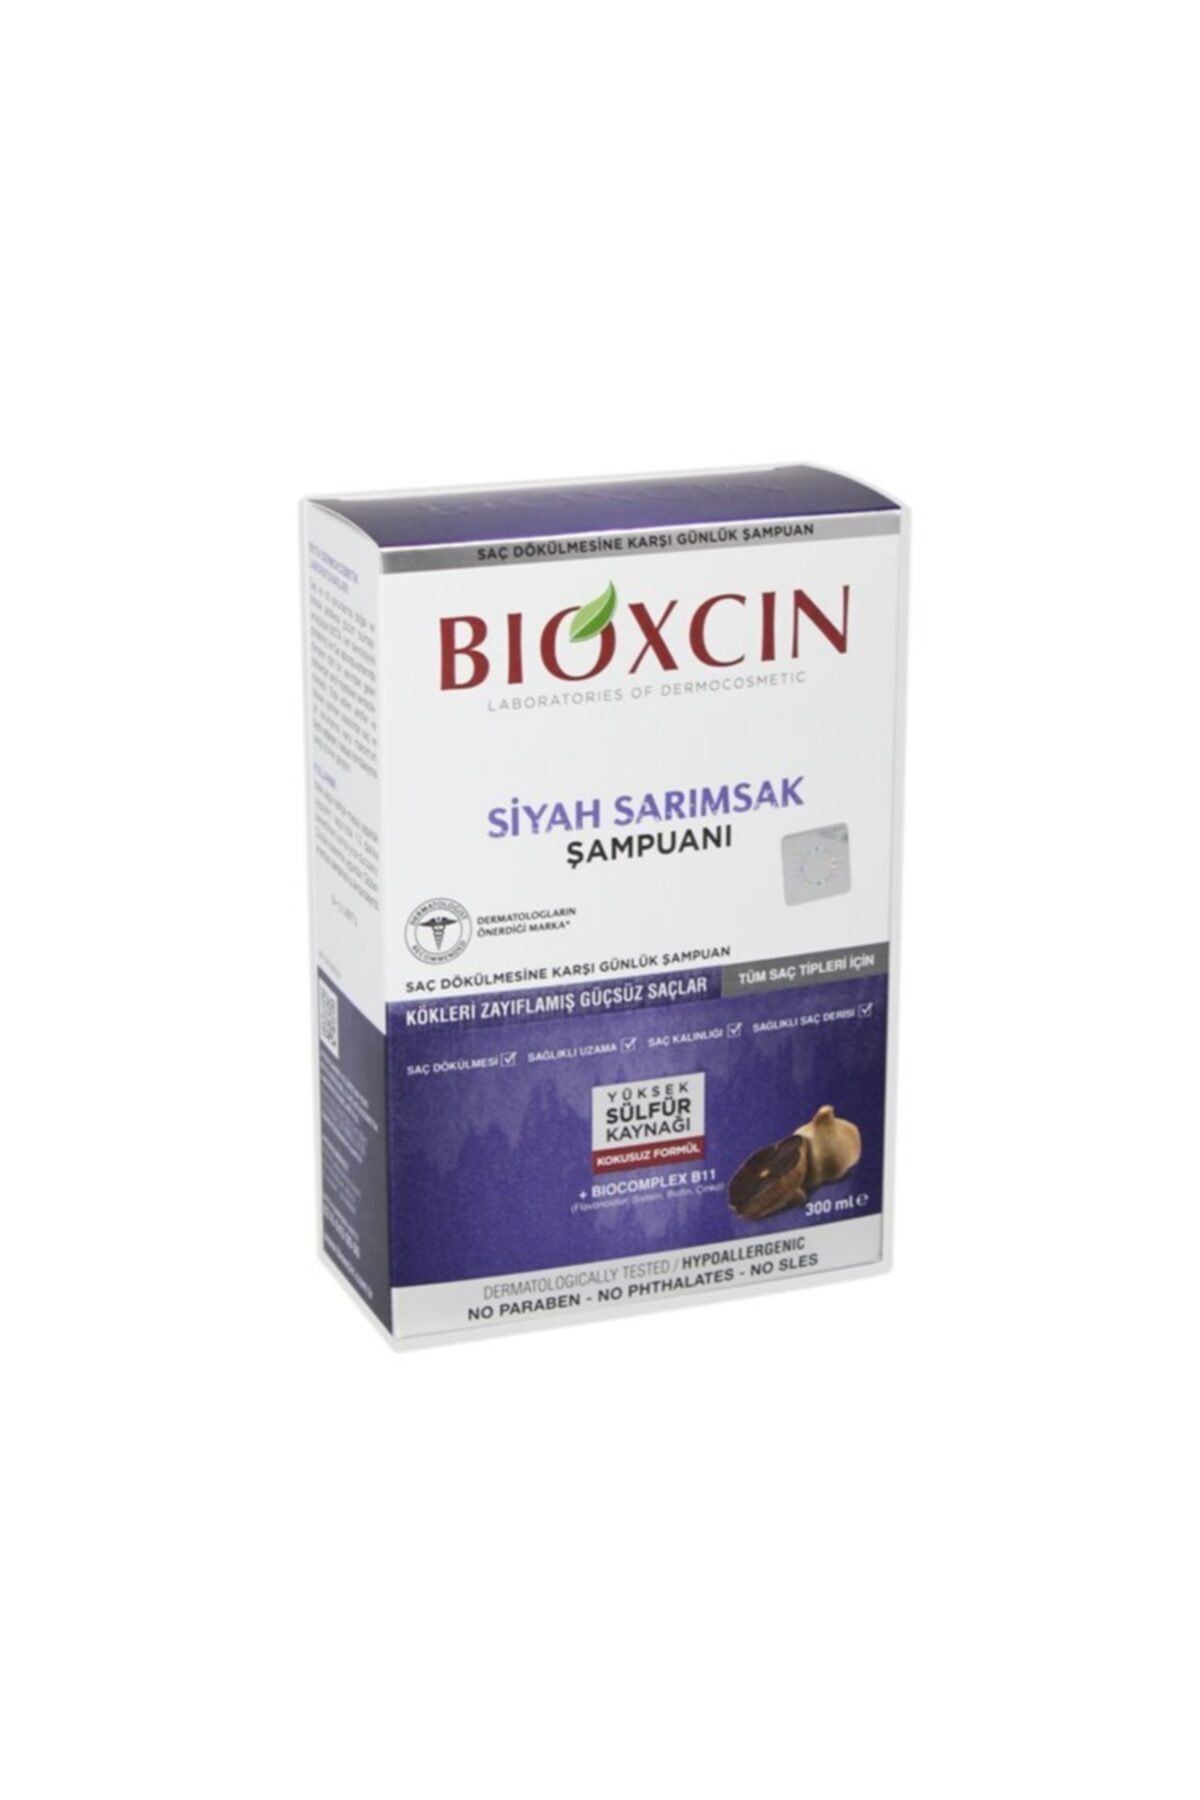 Bioxcin Bıoxcın Sampuan 300ml Siyah Sarimsakli Sac Dökülmesine Karsi